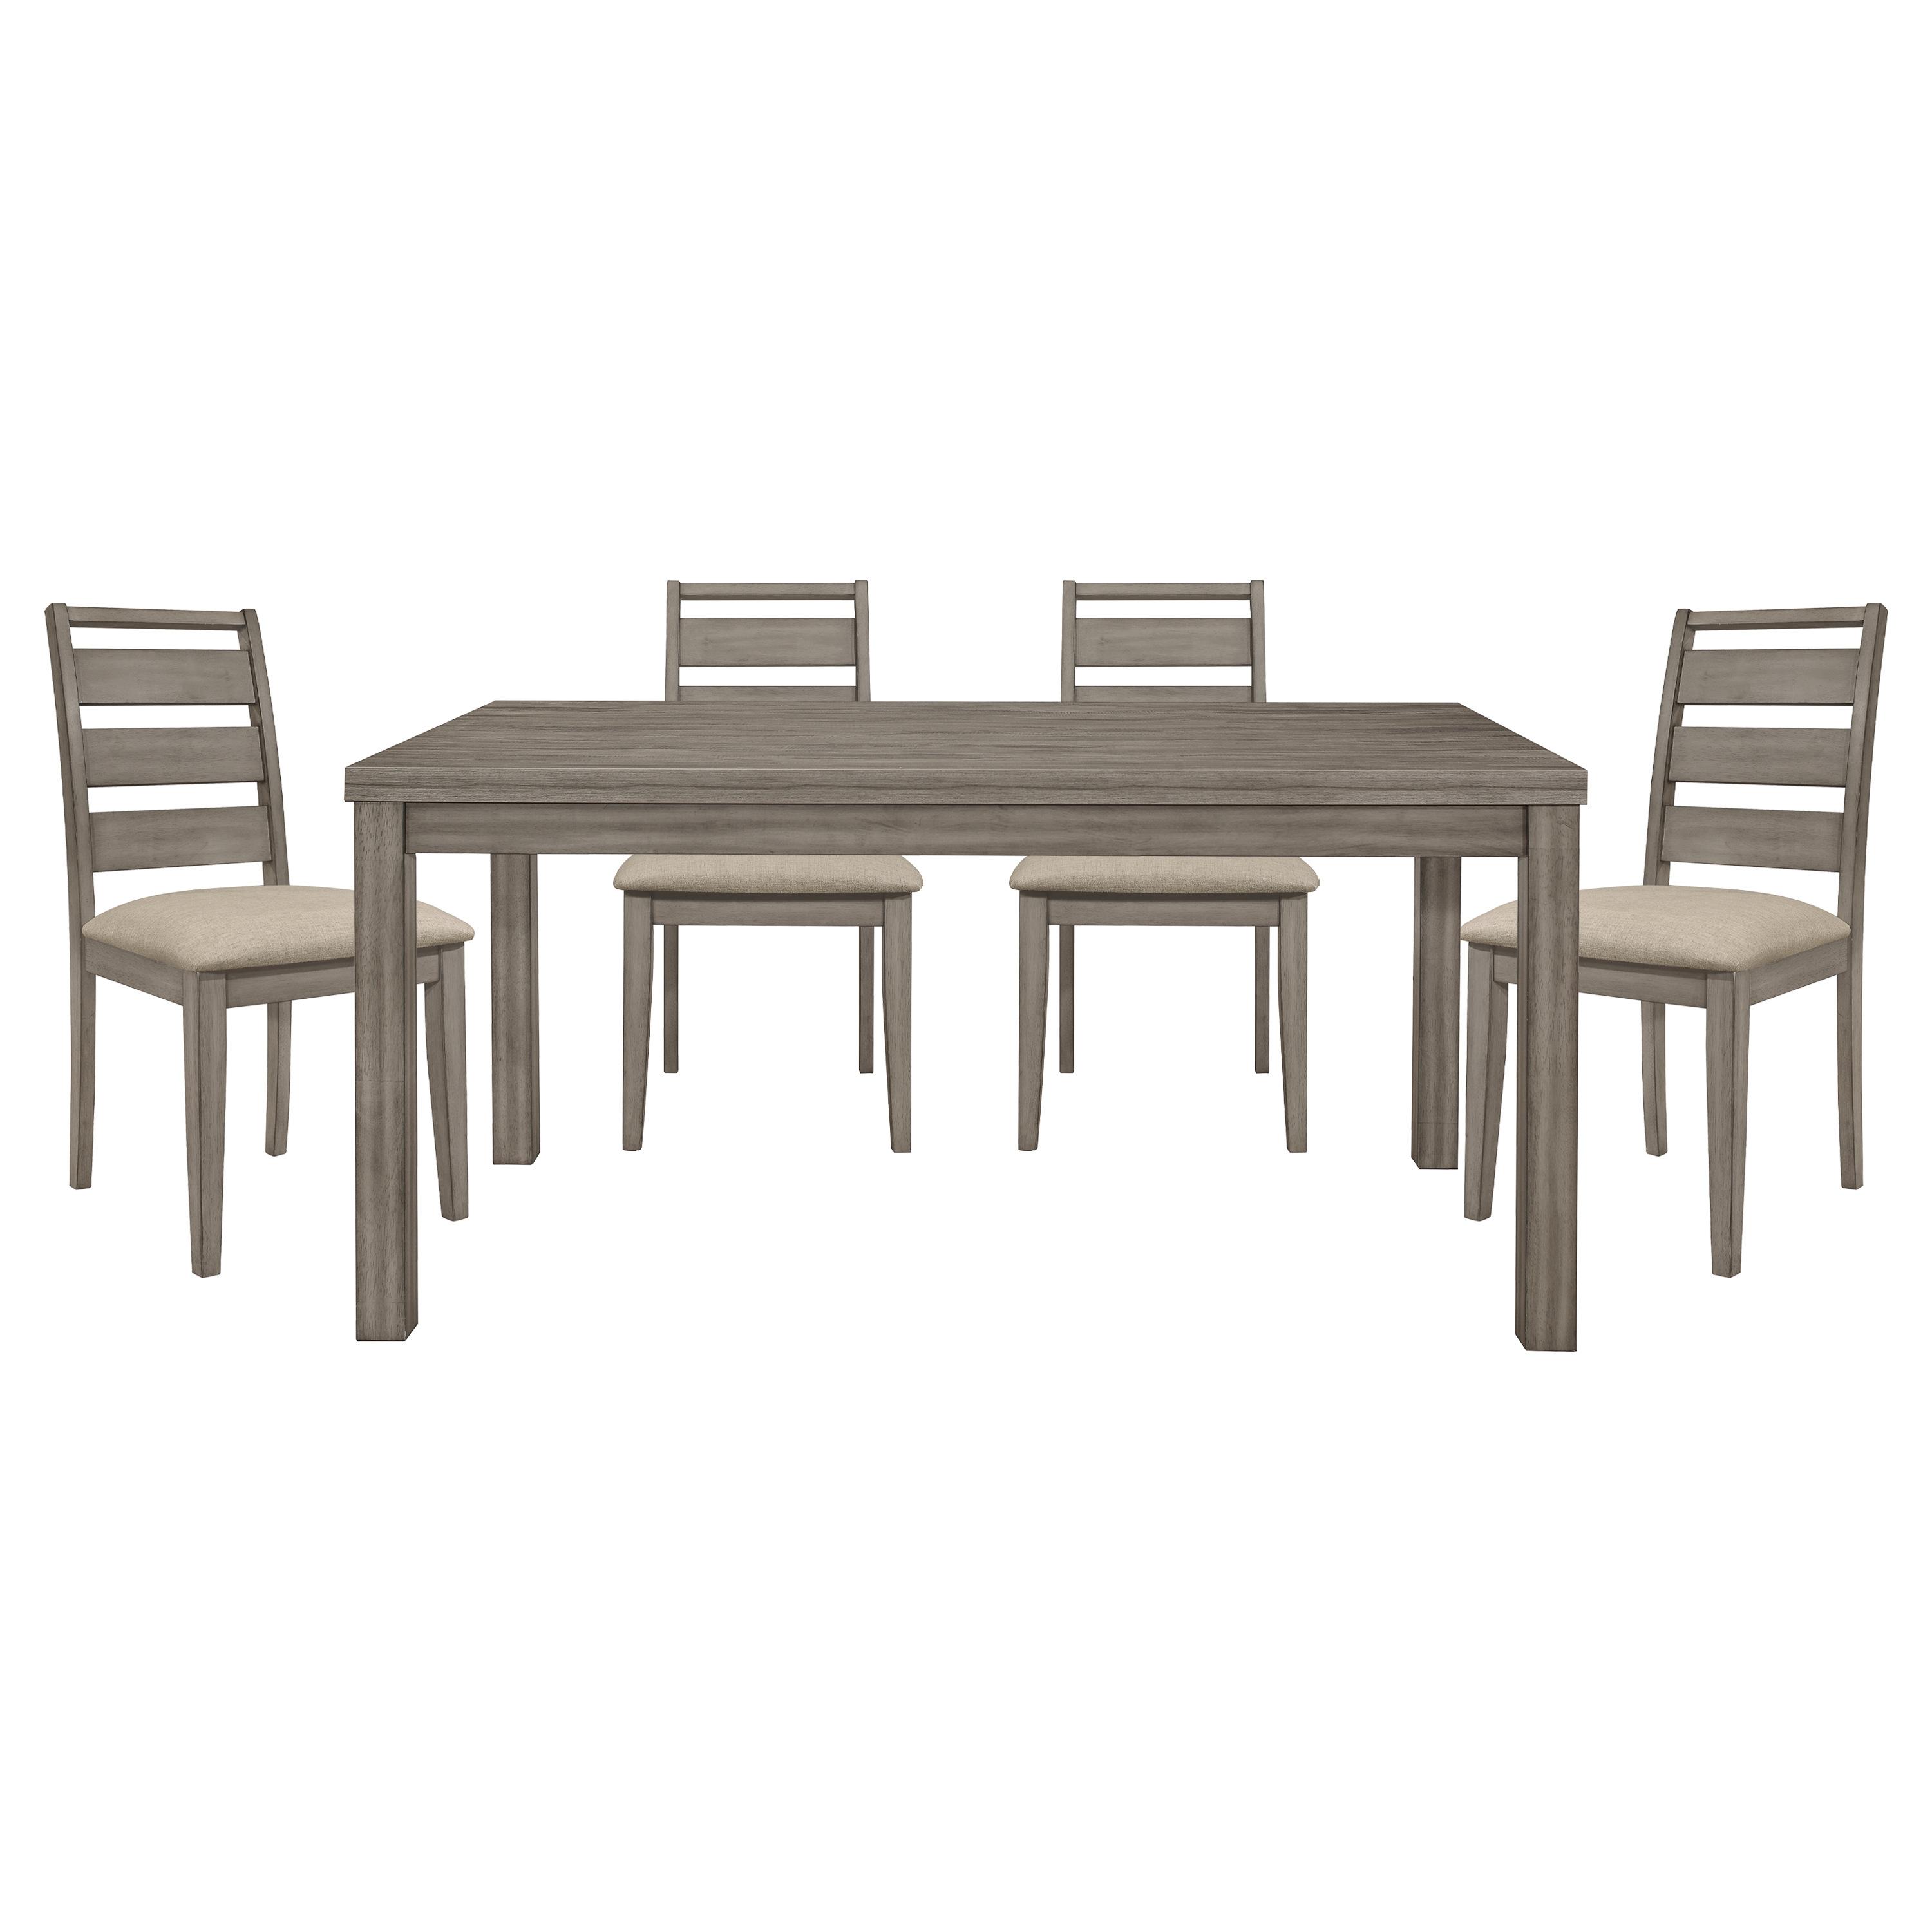 Rustic Dining Room Set 1526-64*5 Bainbridge 1526-64*5 in Gray Polyester